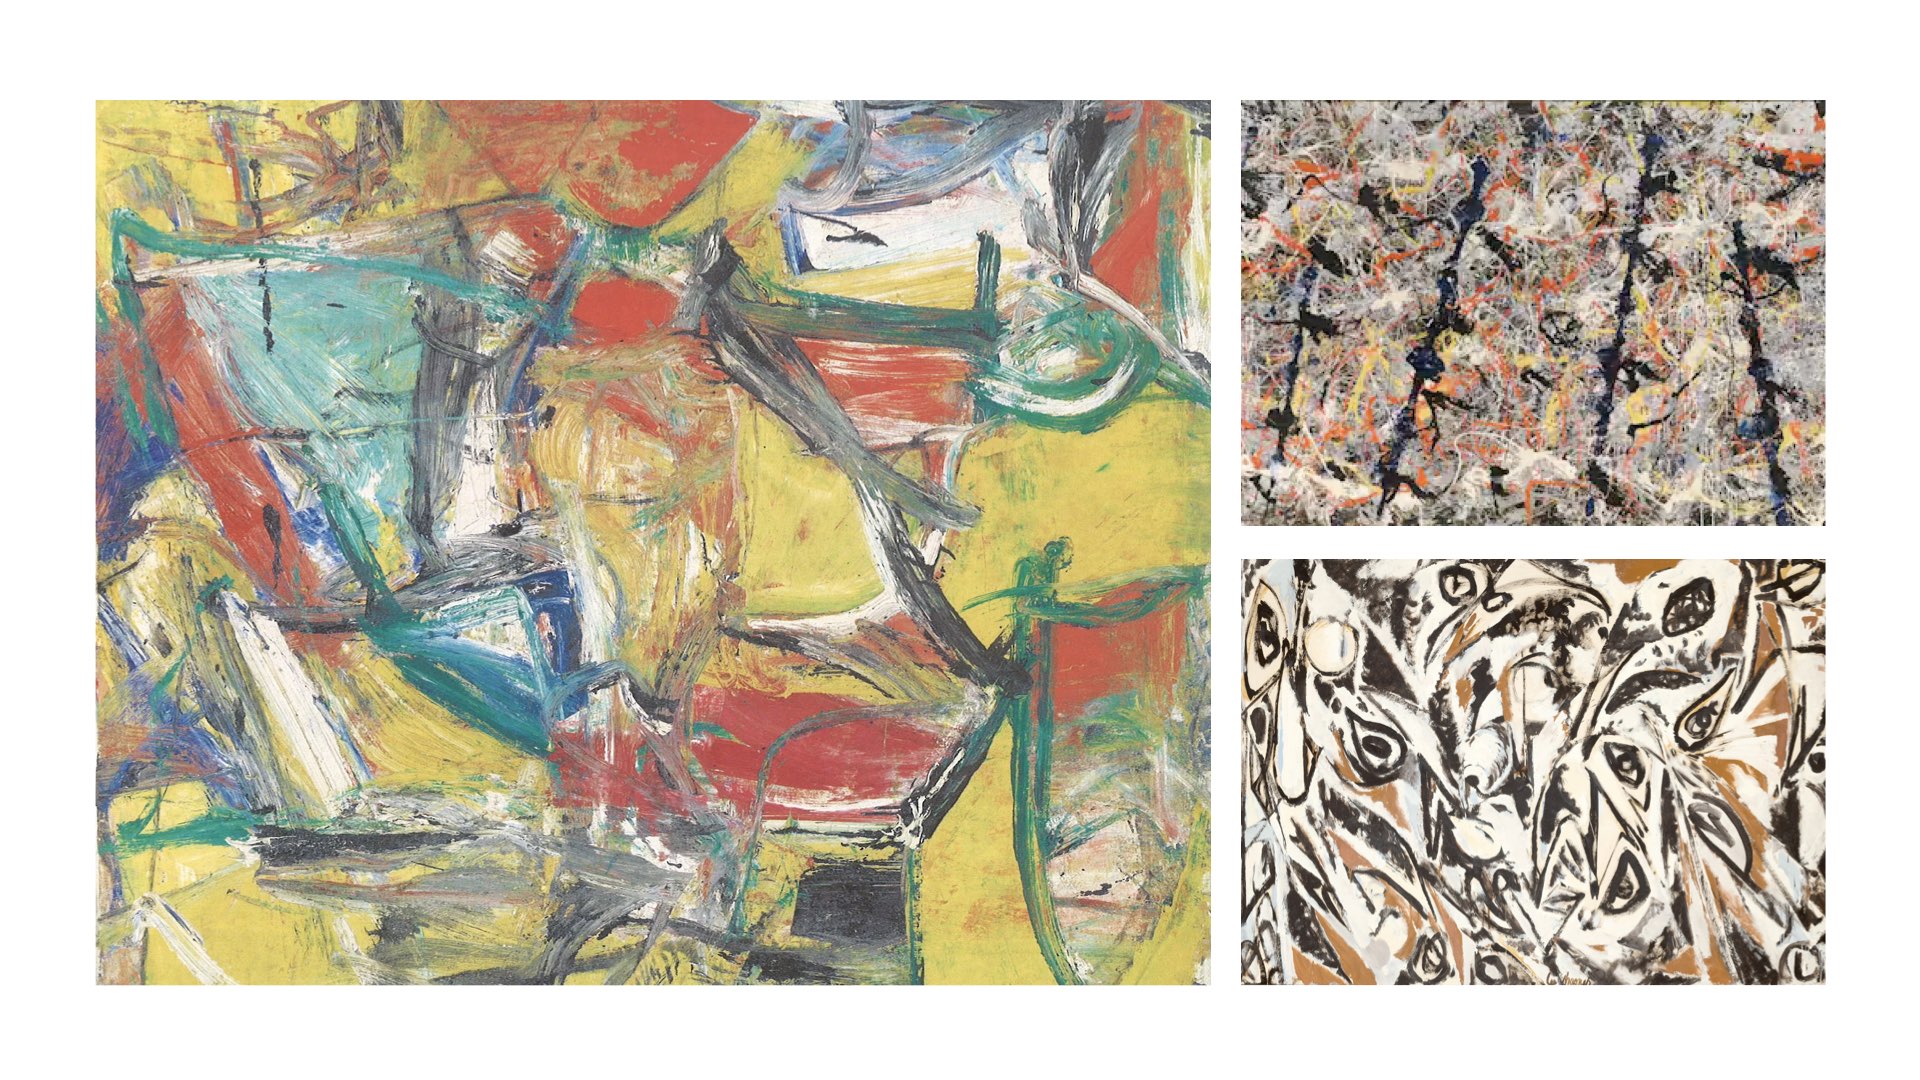 Details of paintings by Willem de Kooing, Lee Krasner, and Jackson Pollock